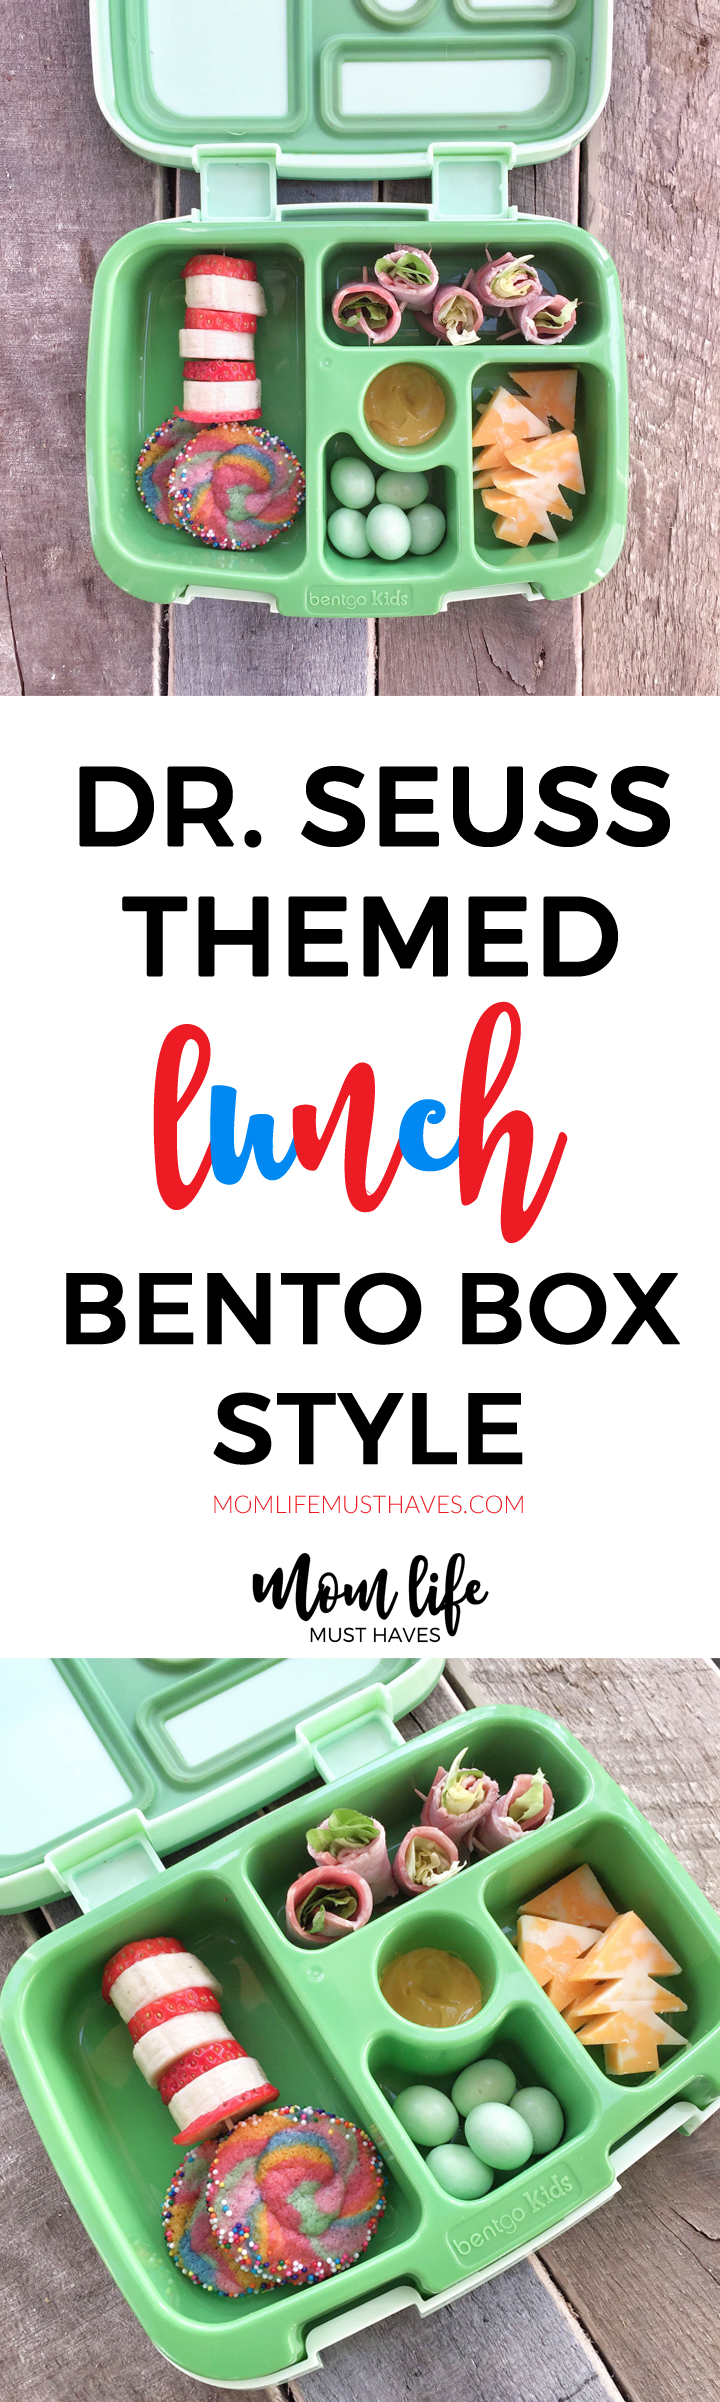 Dr. Seuss bento box lunch for kids! momlifemusthaves.com